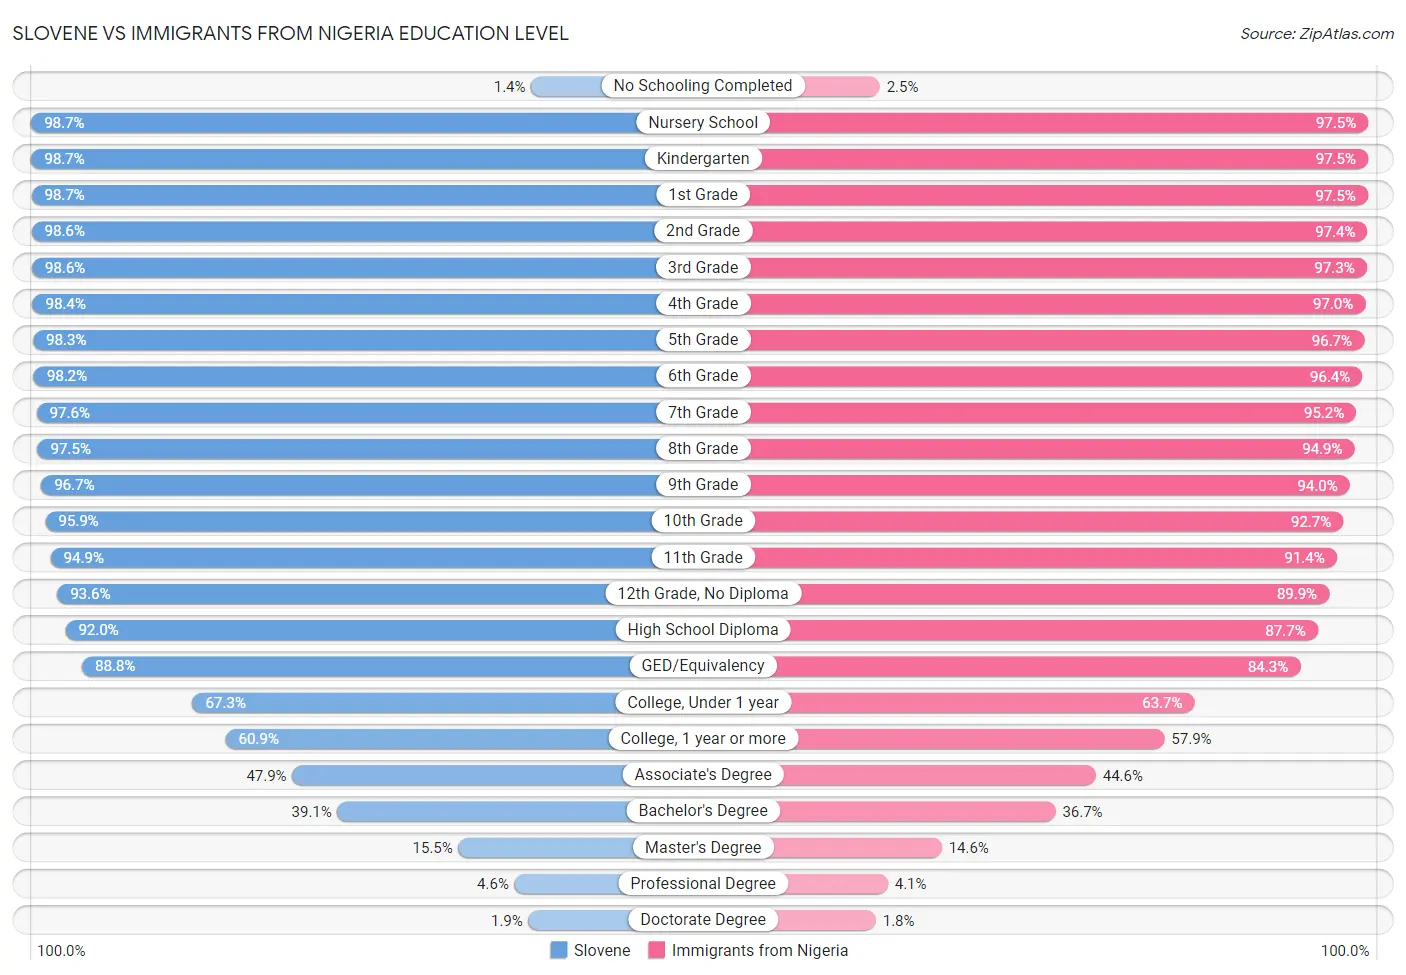 Slovene vs Immigrants from Nigeria Education Level